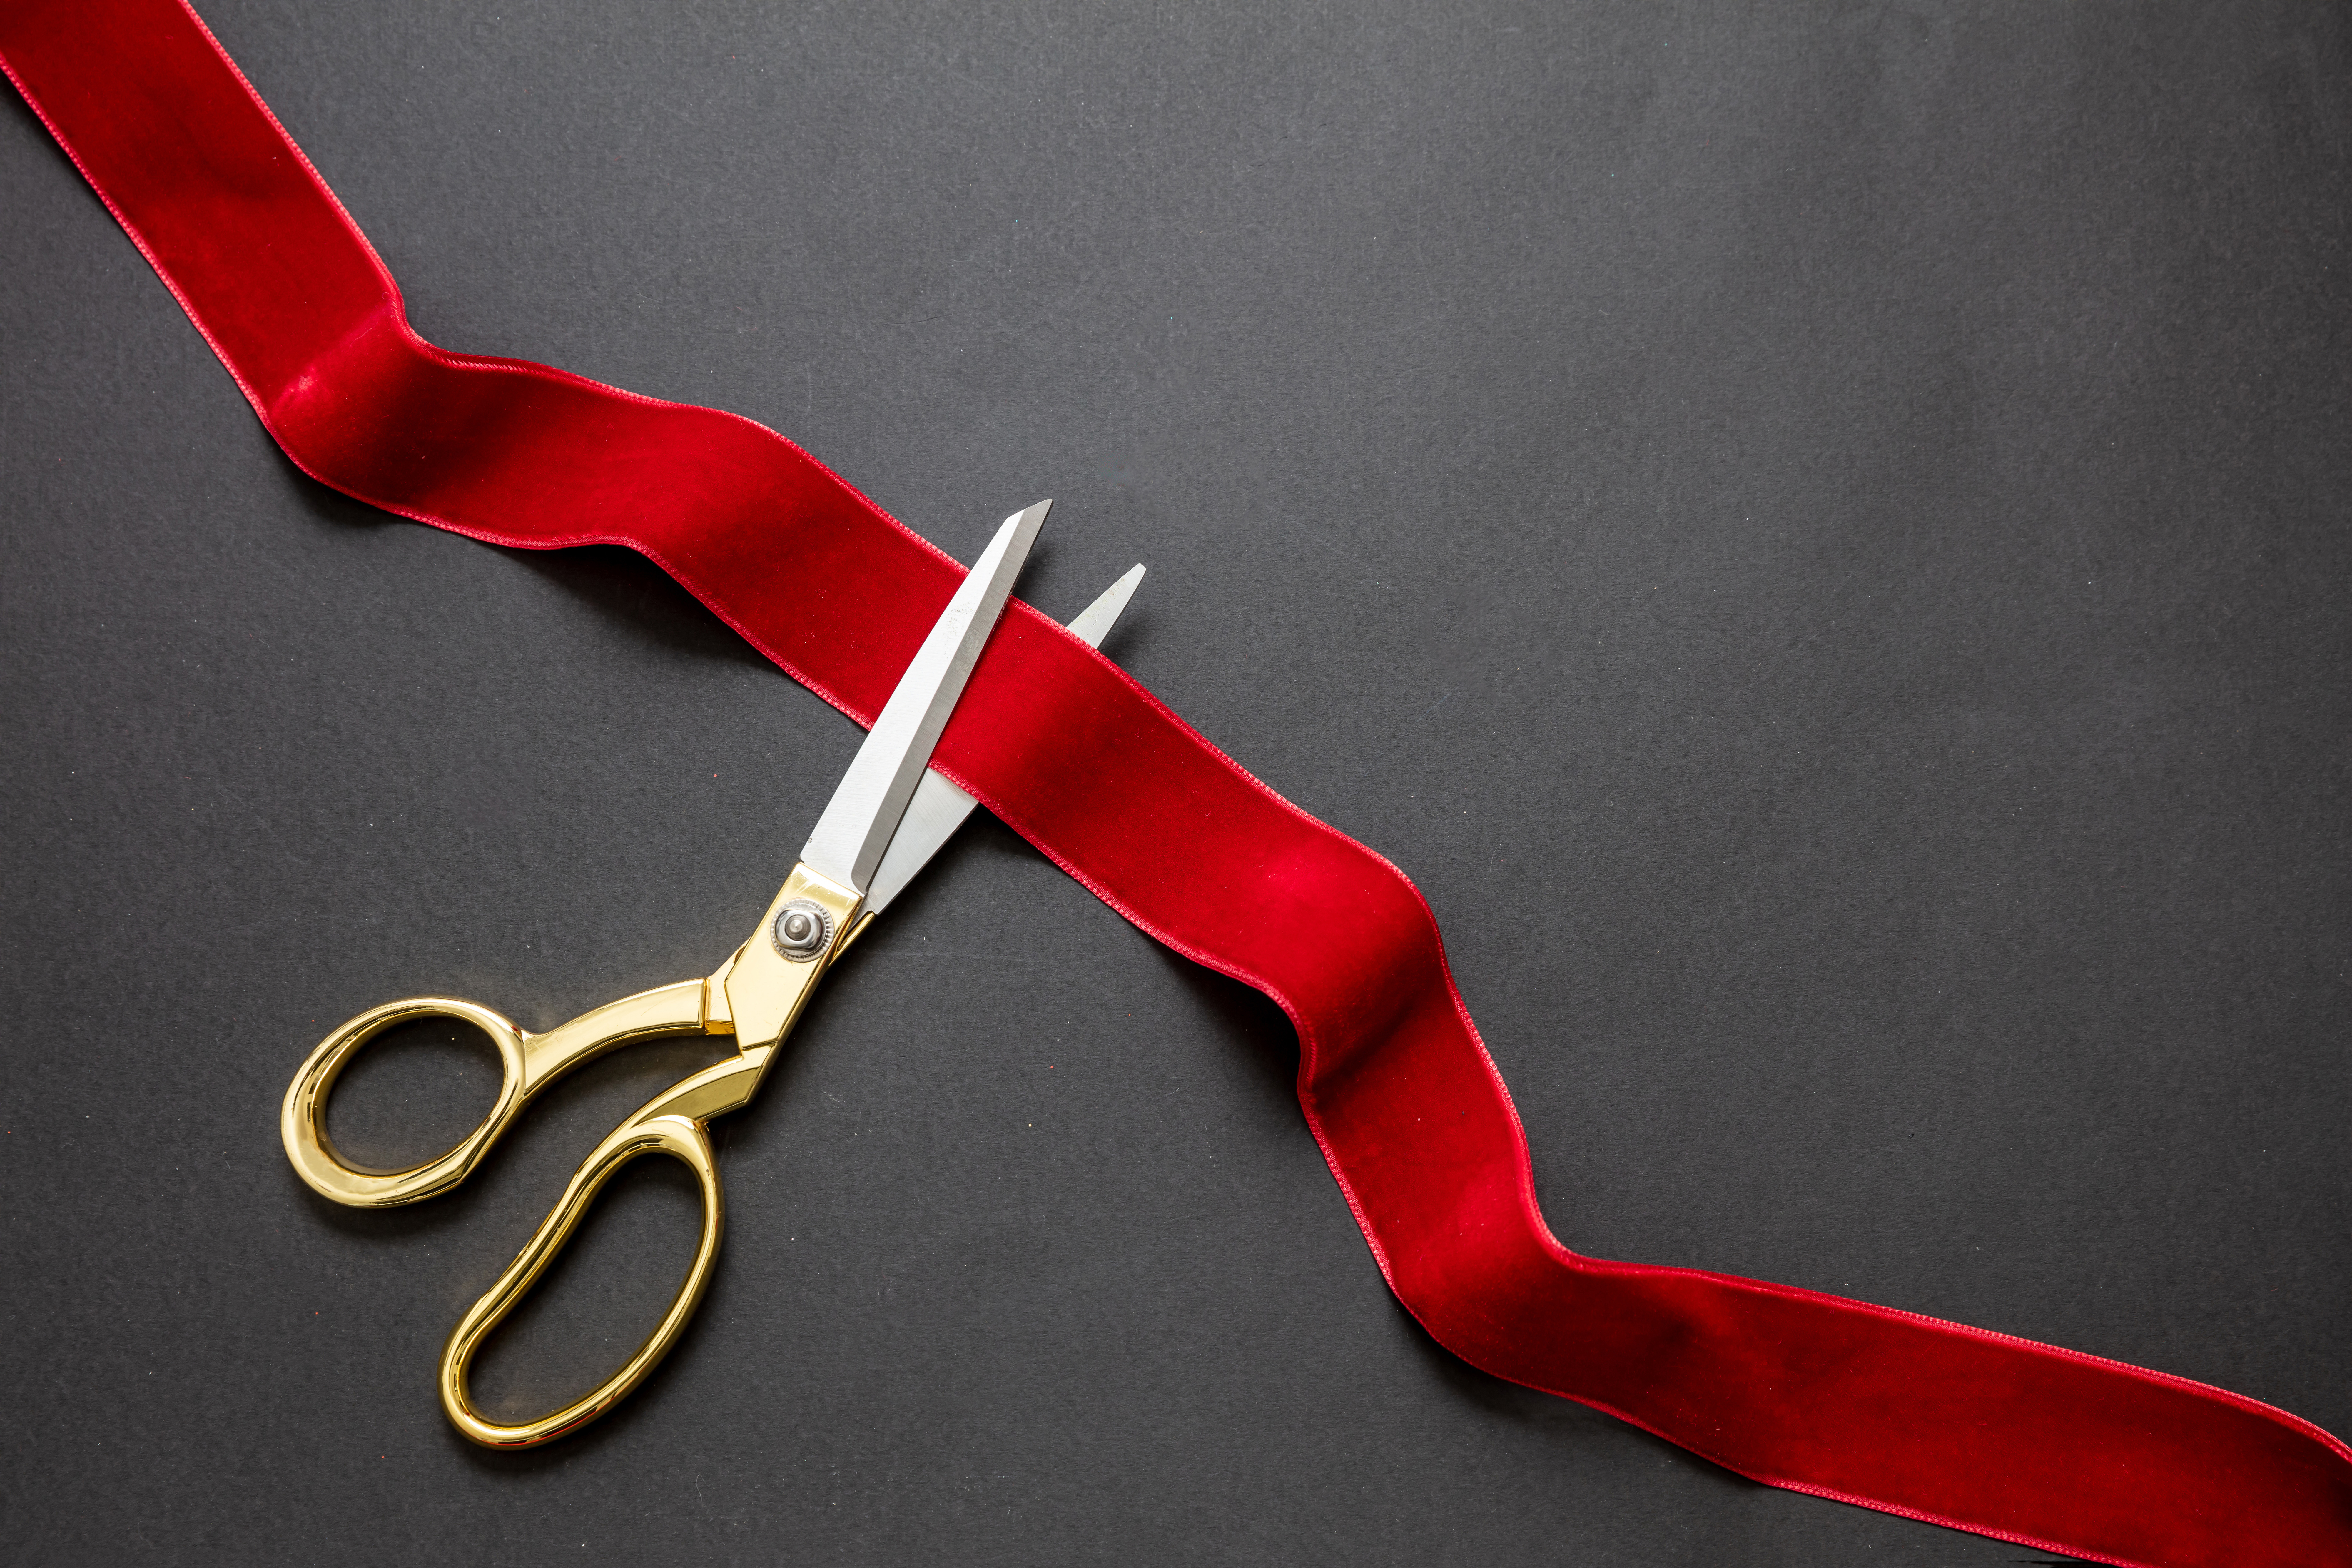 February 8th: Ribbon Cutting & Grand Opening Celebration